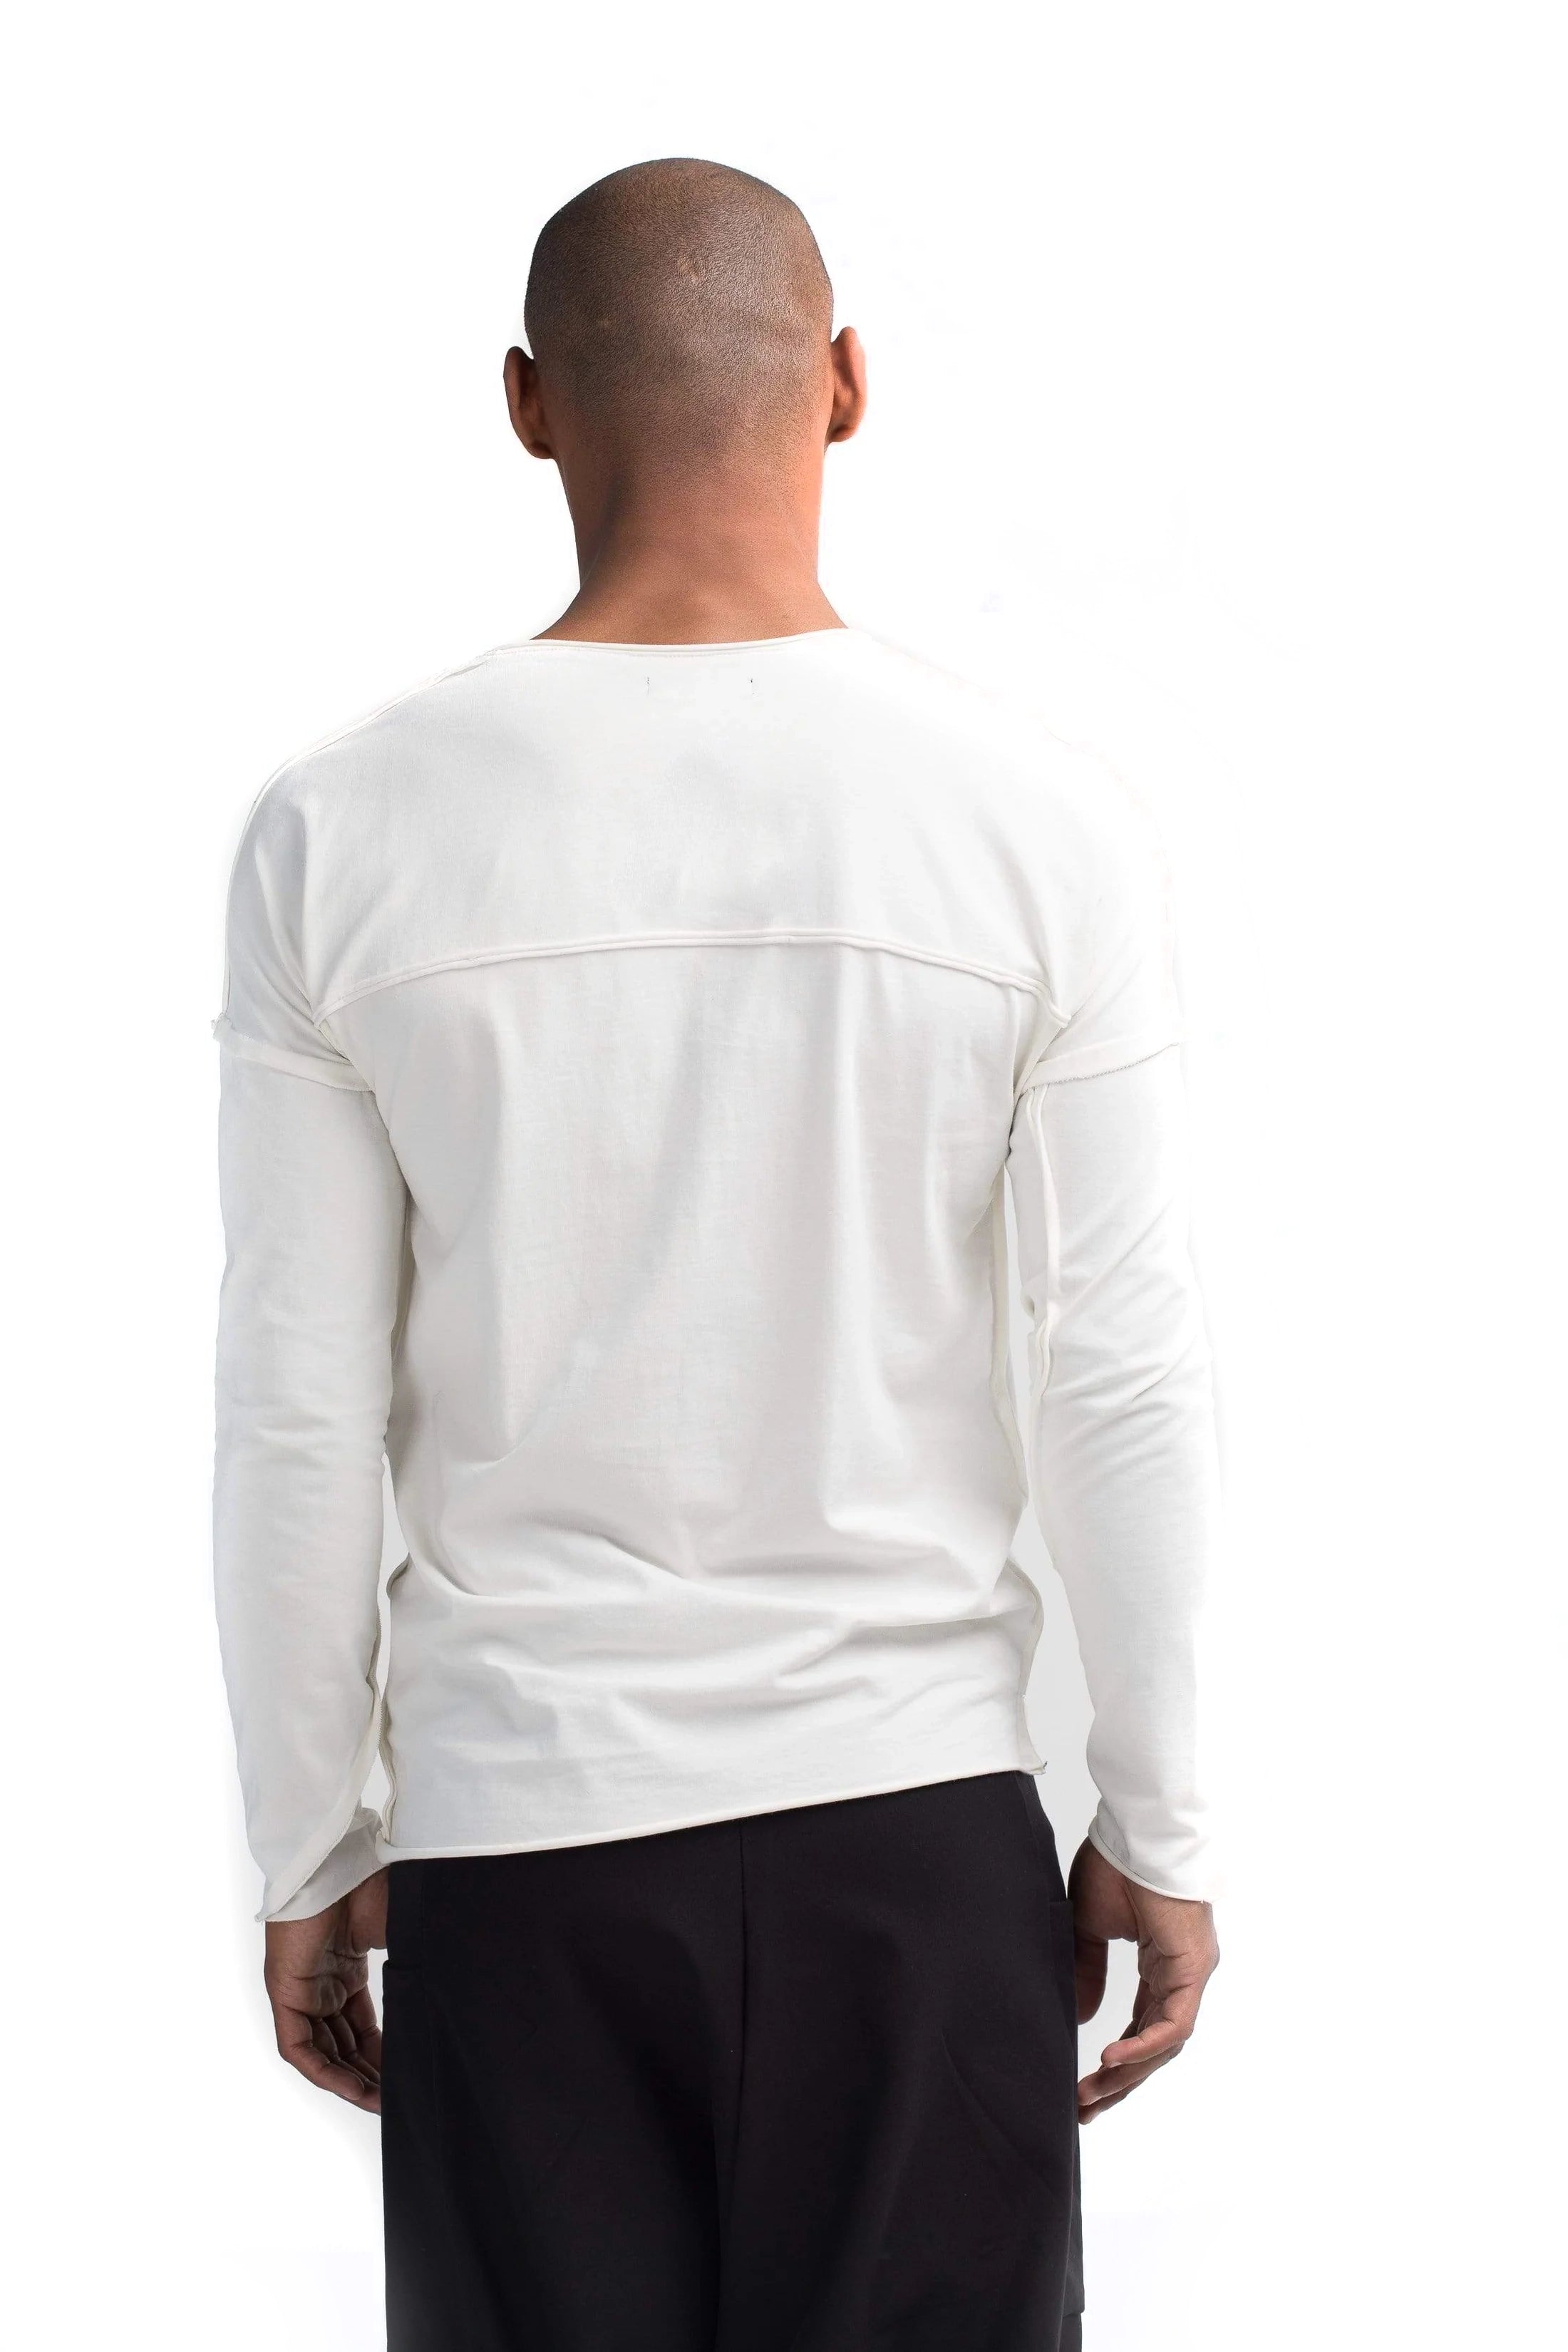 Bundle: 3x White Long Sleeve T-shirt